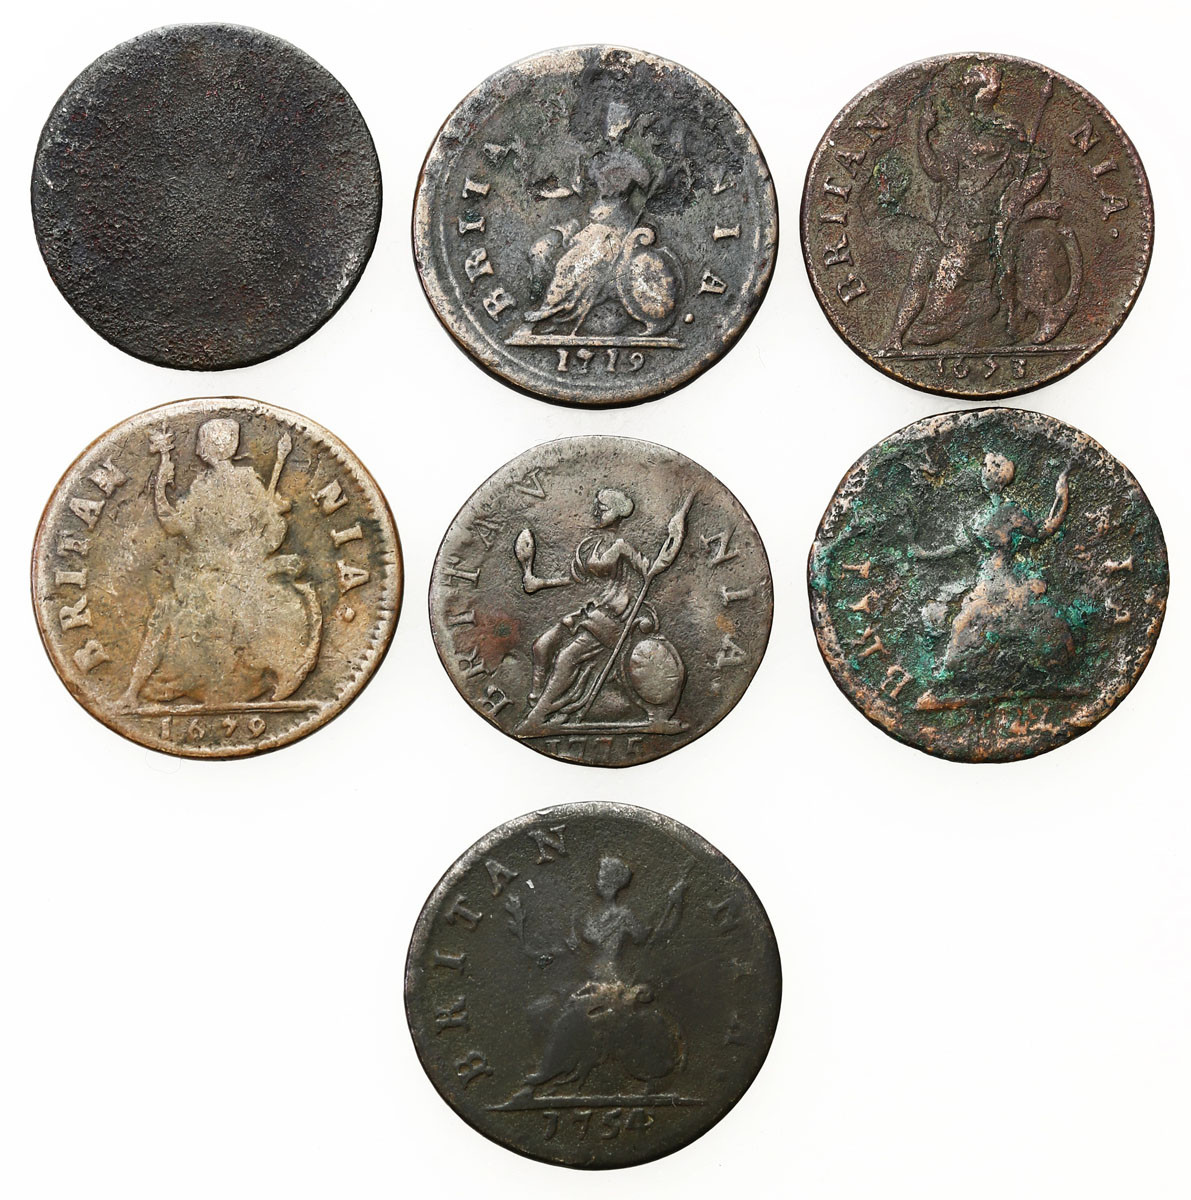 Wielka Brytania. Farthing 1673-1775, zestaw 7 monet